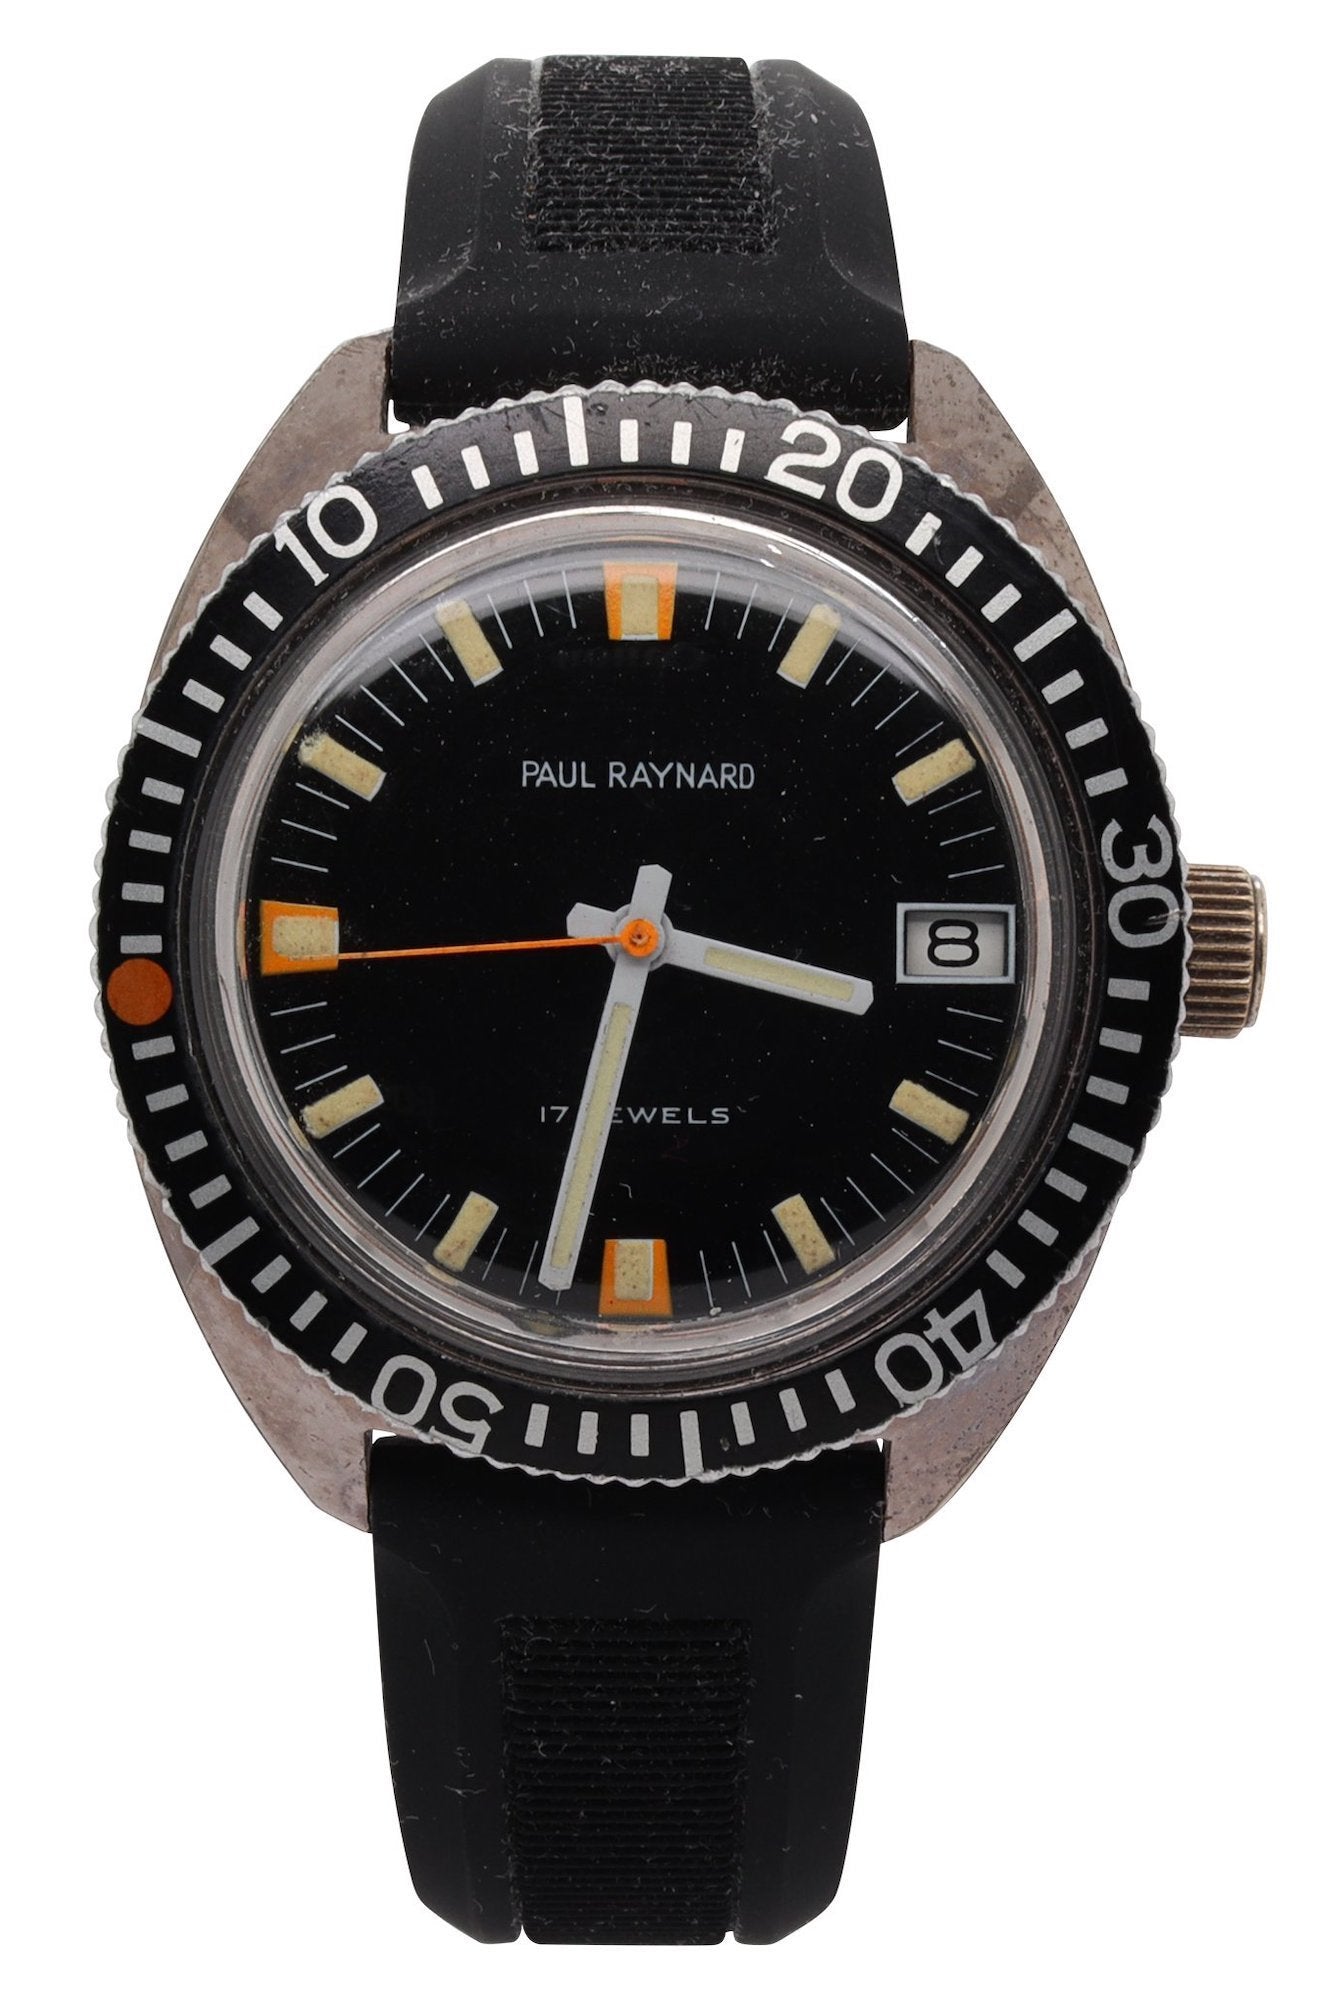 Paul Raynard Skin Diver - Counting Time Watch Purveyors